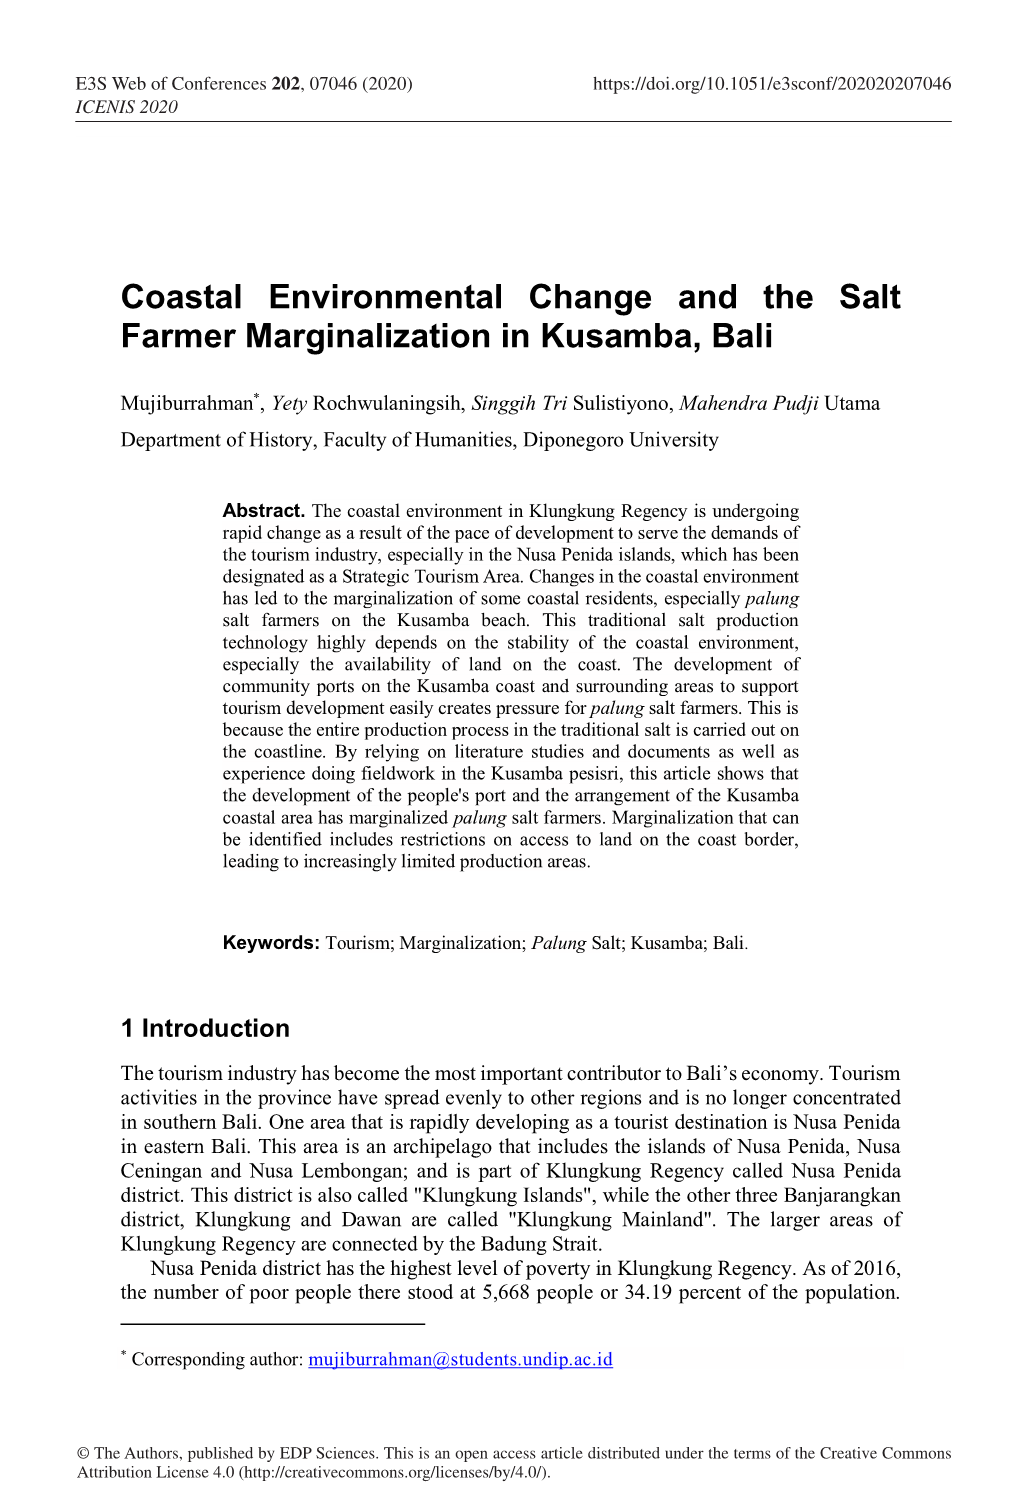 Coastal Environmental Change and the Salt Farmer Marginalization in Kusamba, Bali